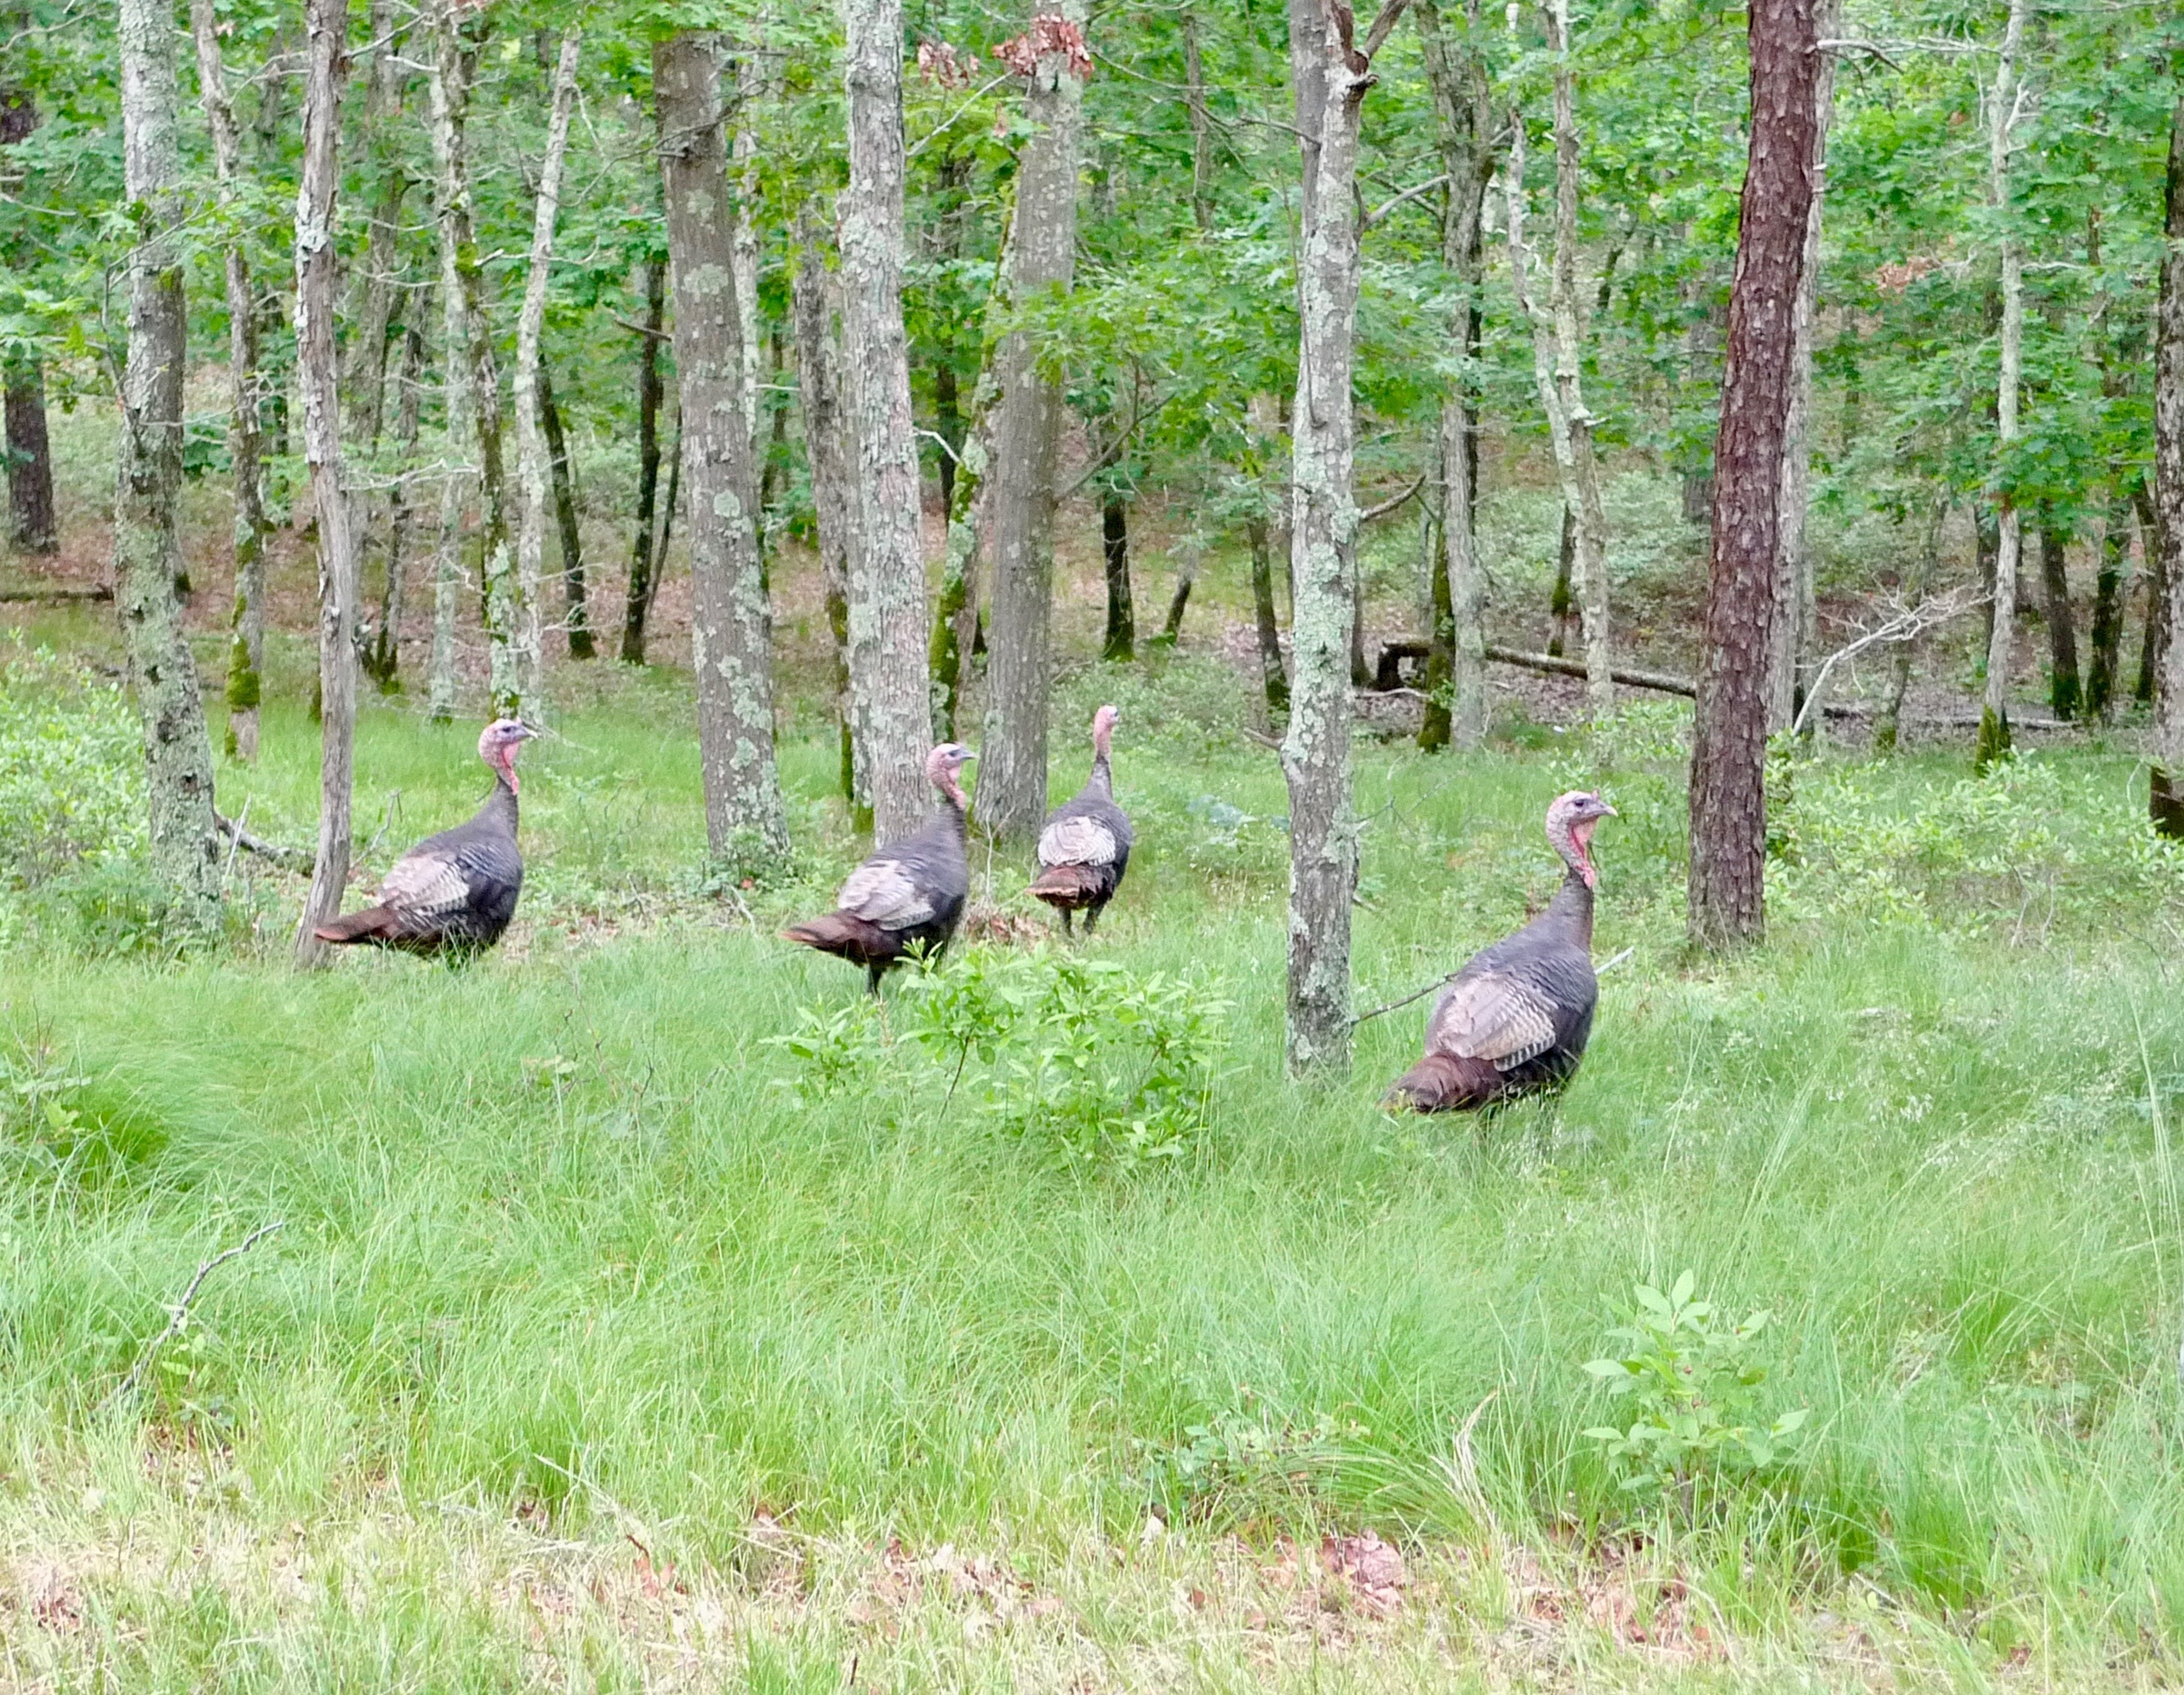 Turkeys found roaming on Wainscott Harbor Road. 